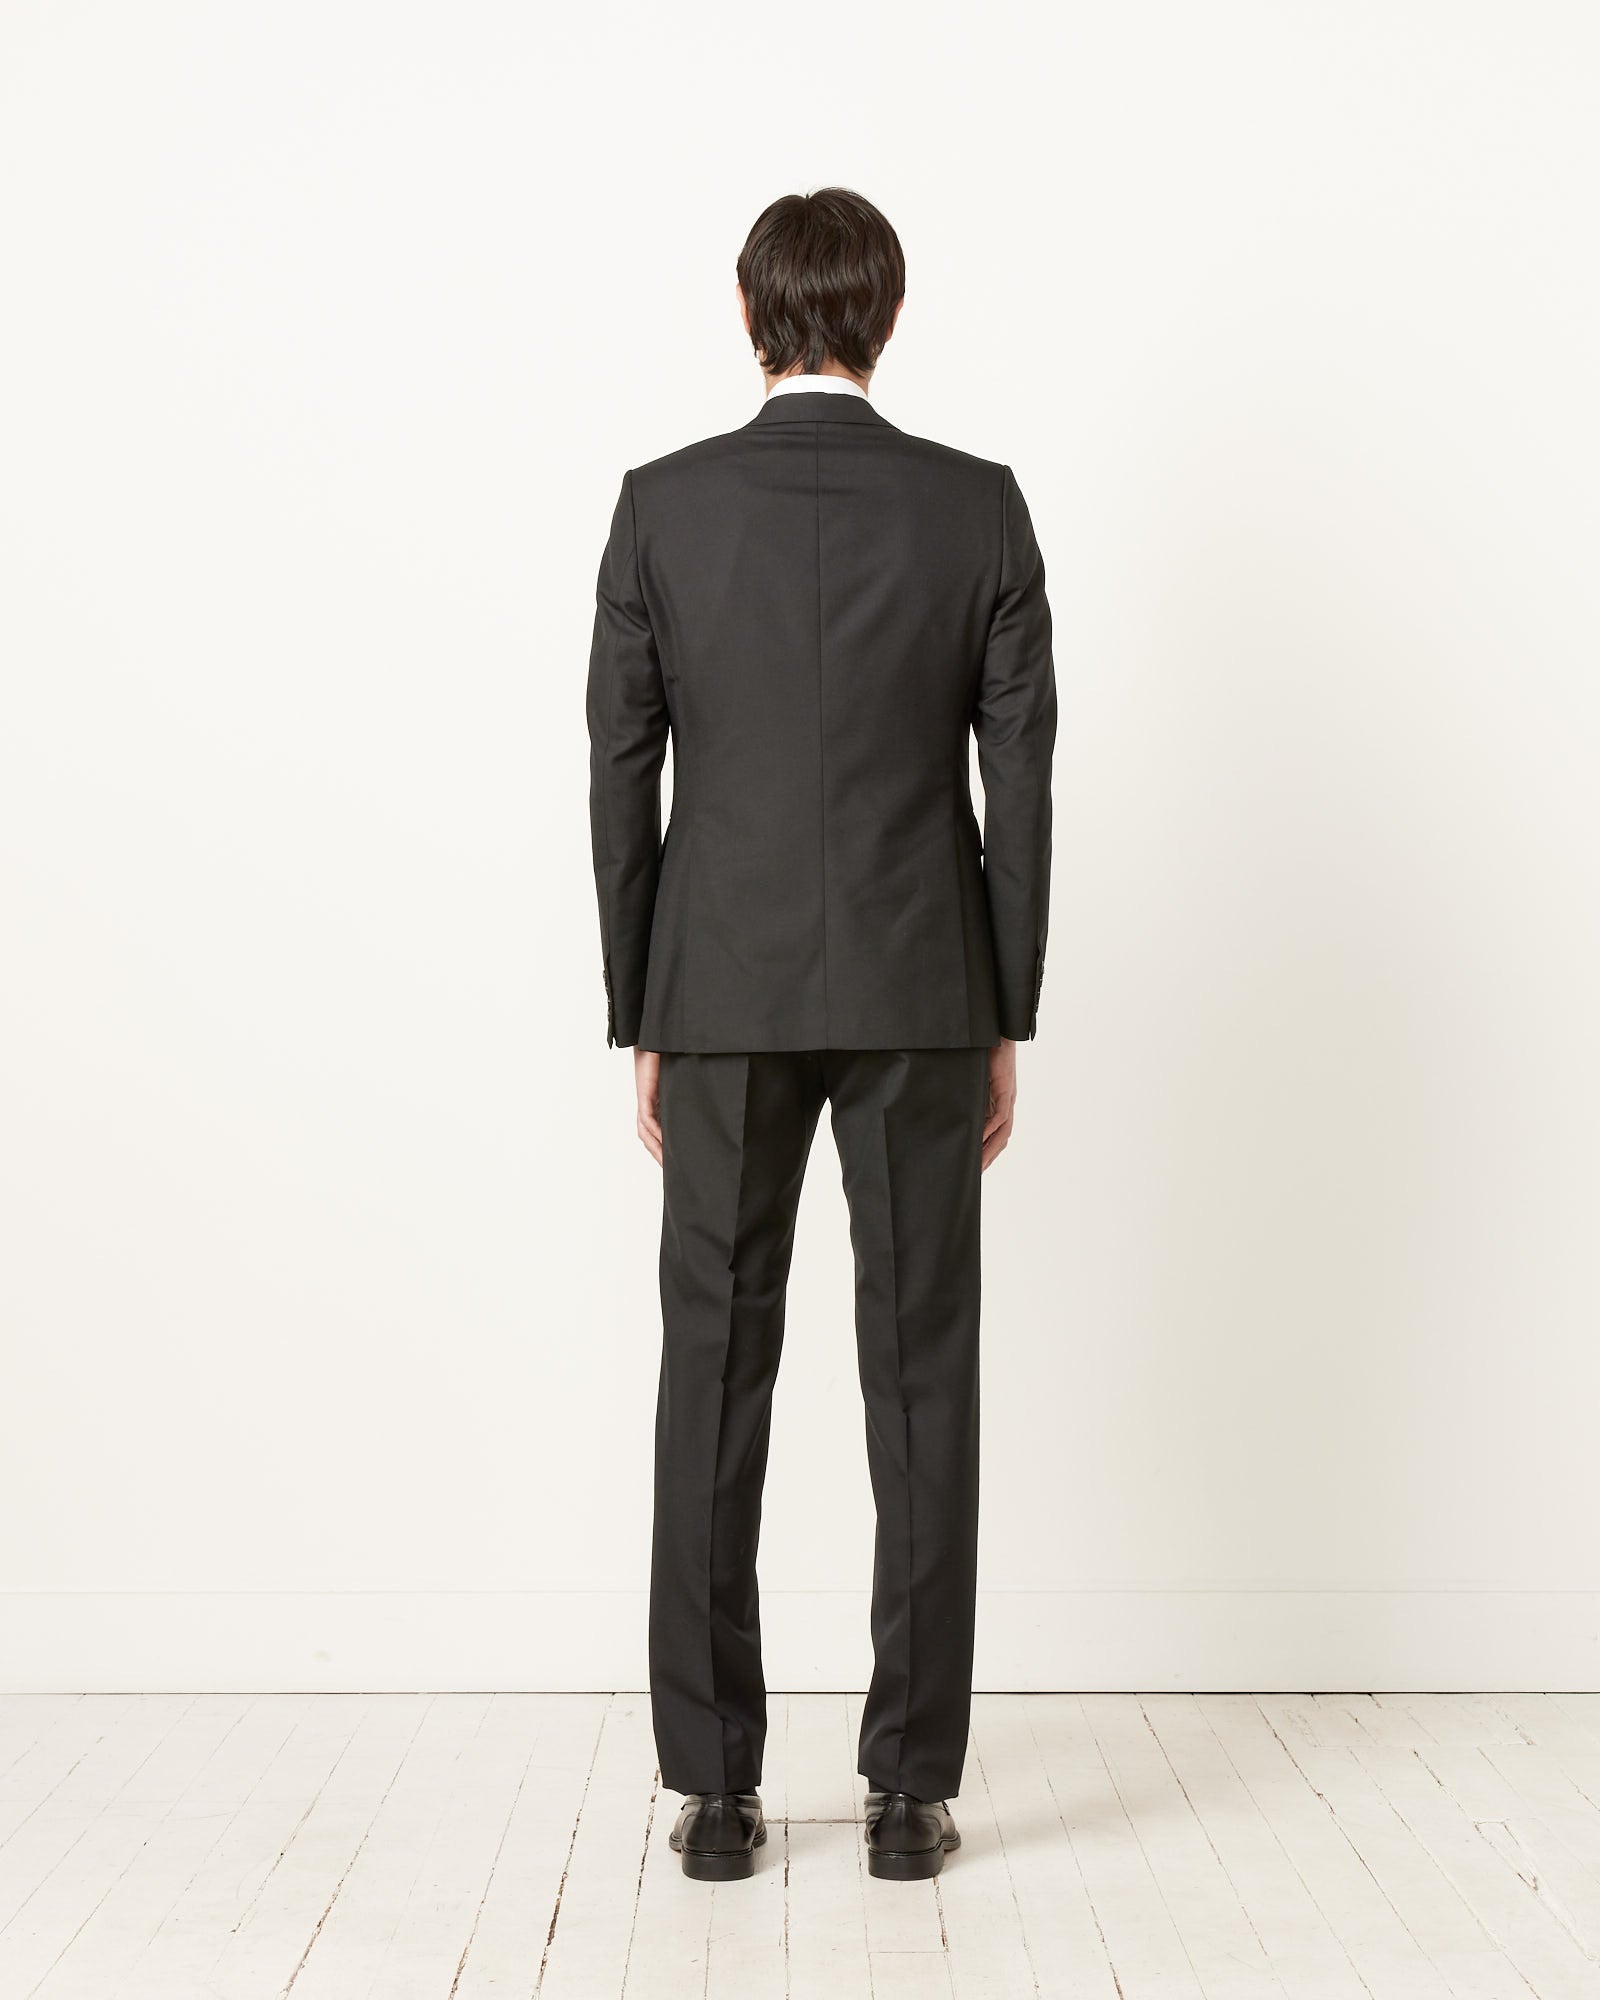 Slim Fit Suit in Black